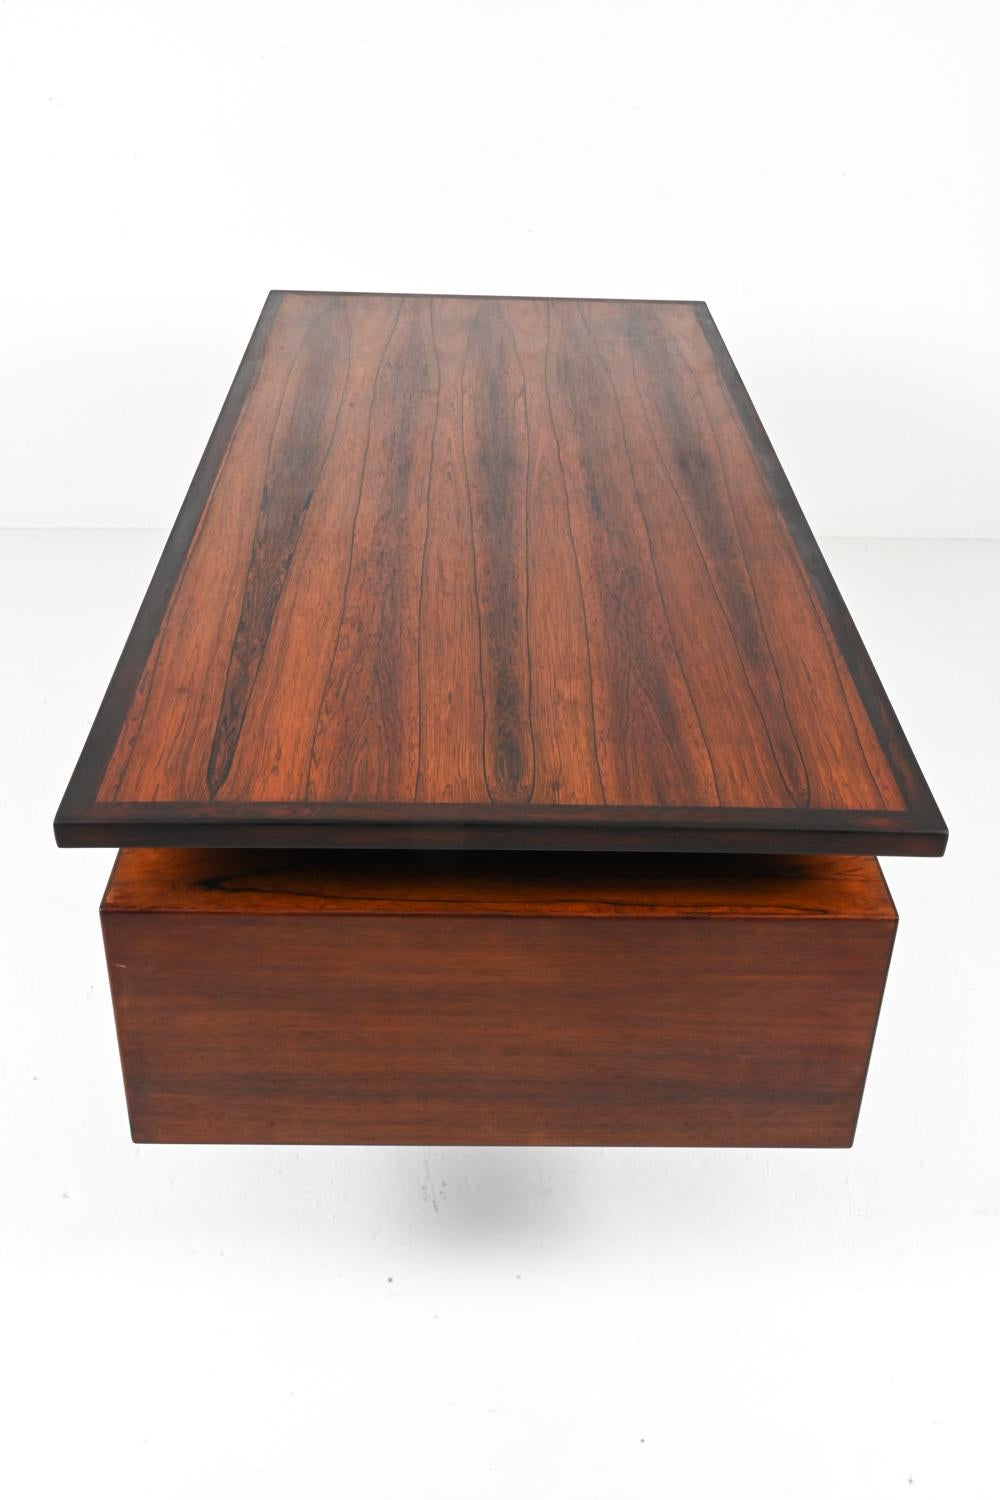 Rare Danish Rosewood Desk Attributed to Jorgen & Nanna Ditzel for Kolds Savvaerk For Sale 13